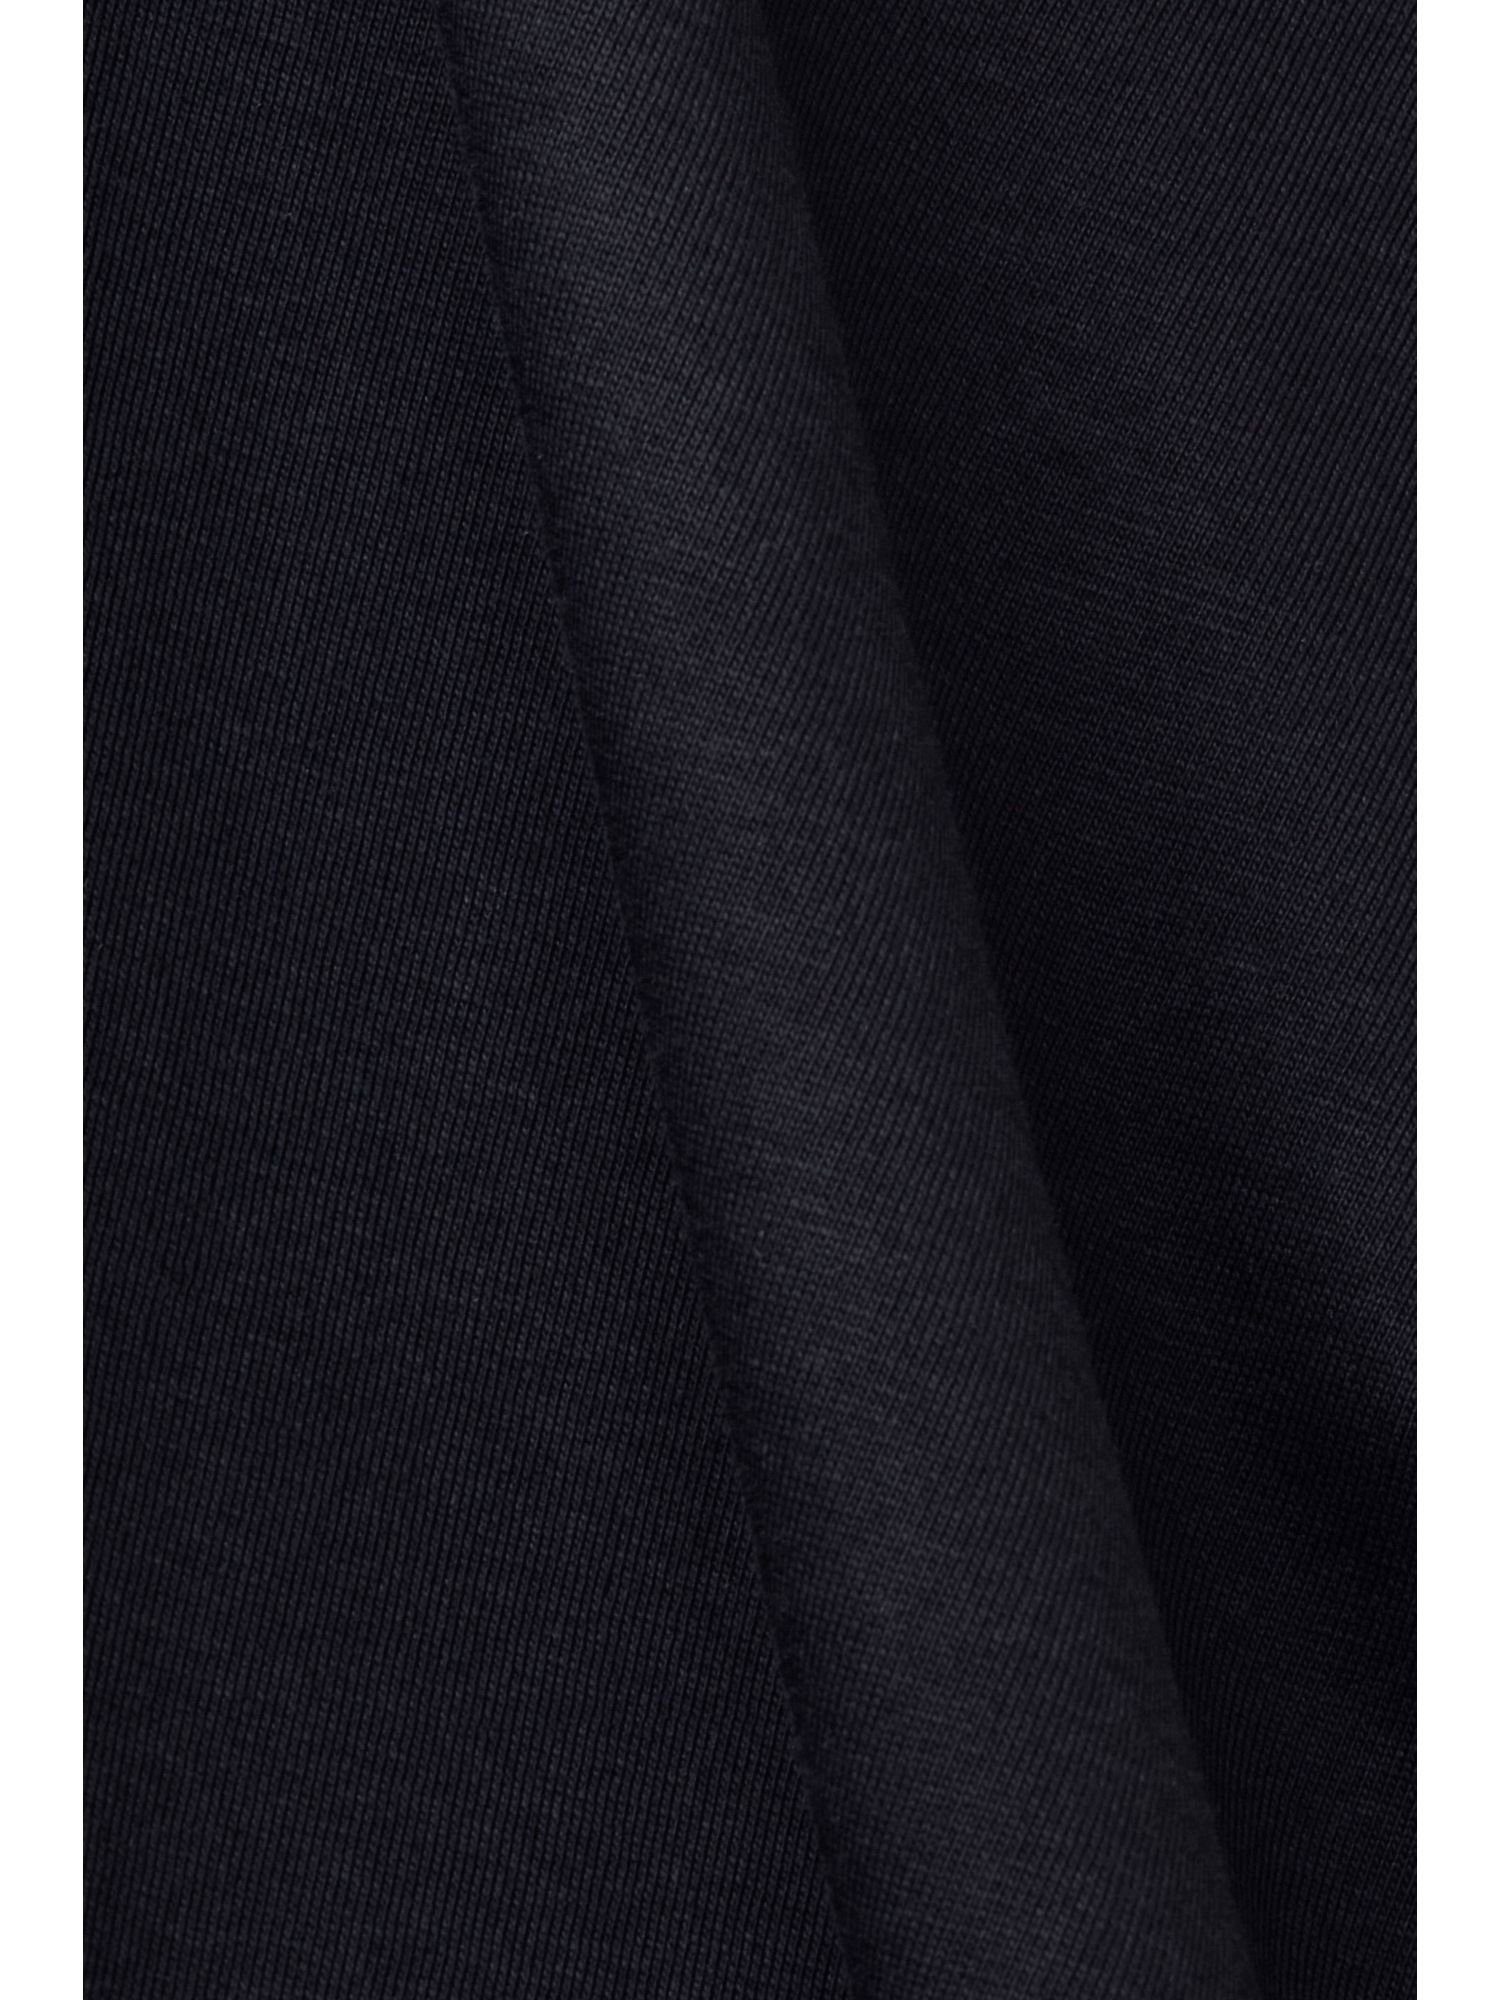 edc by Esprit Midikleid Jersey Kleid BLACK aus